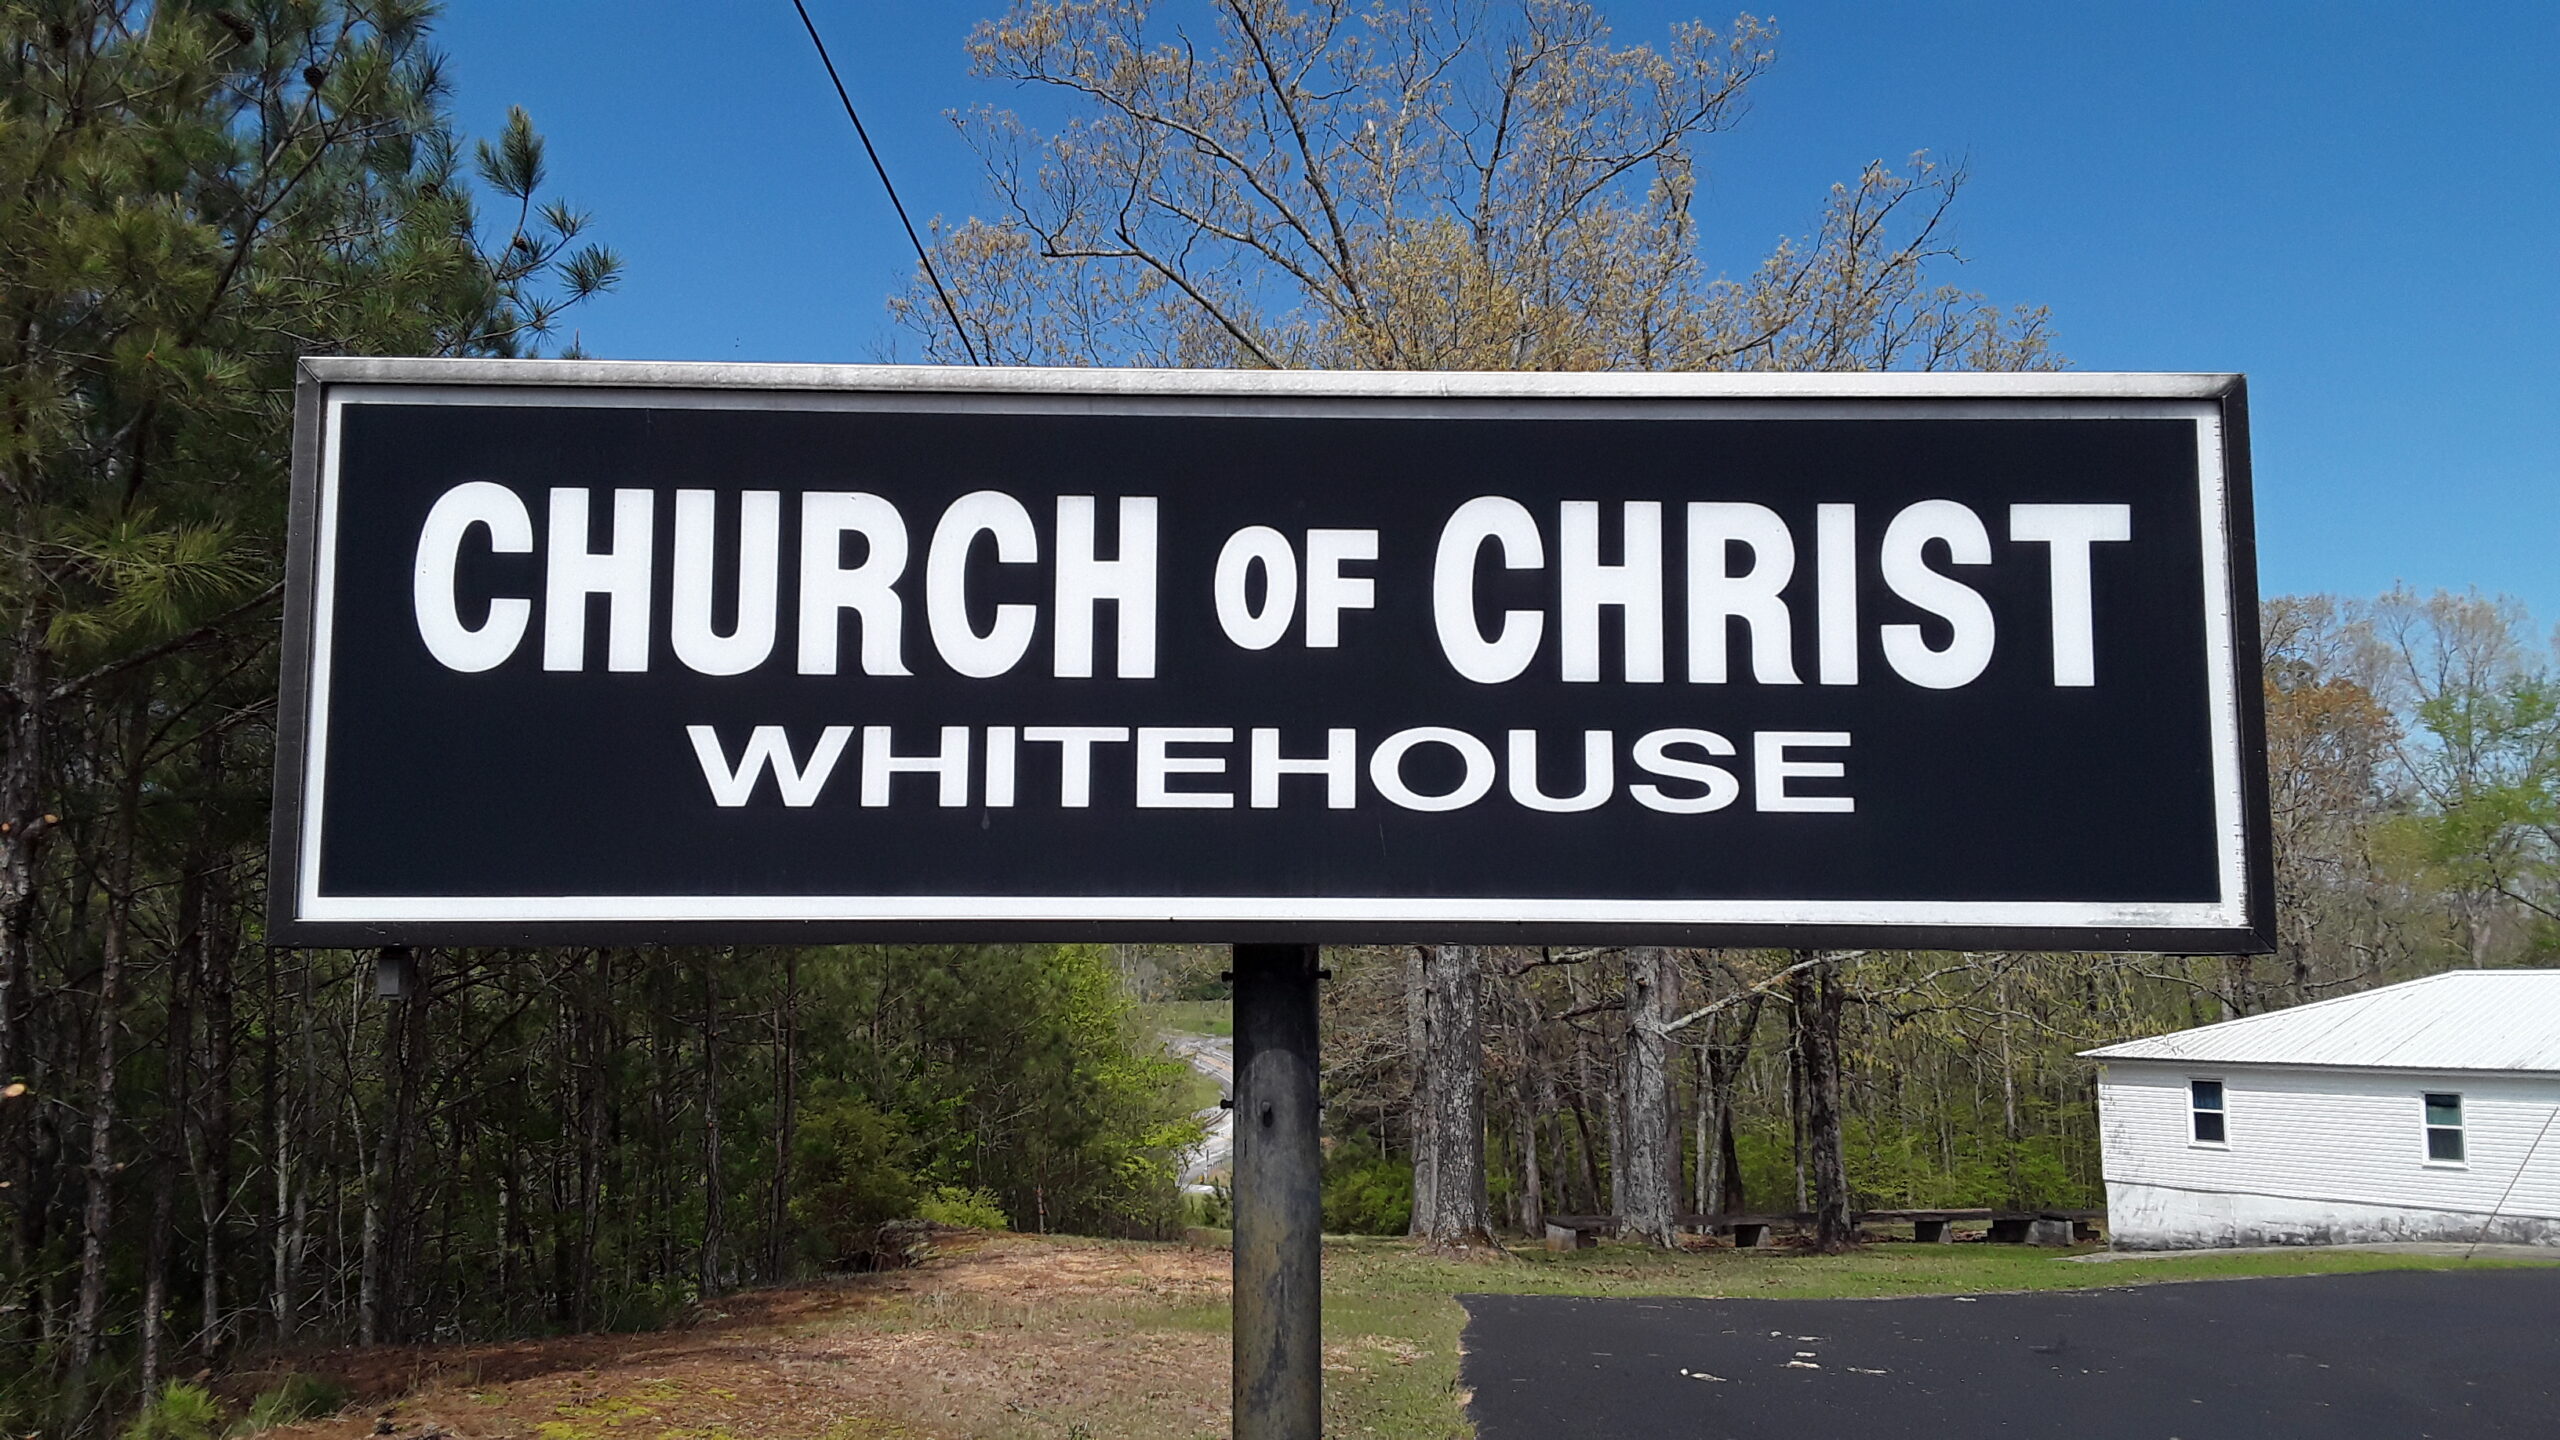 Whitehouse Church of Christ